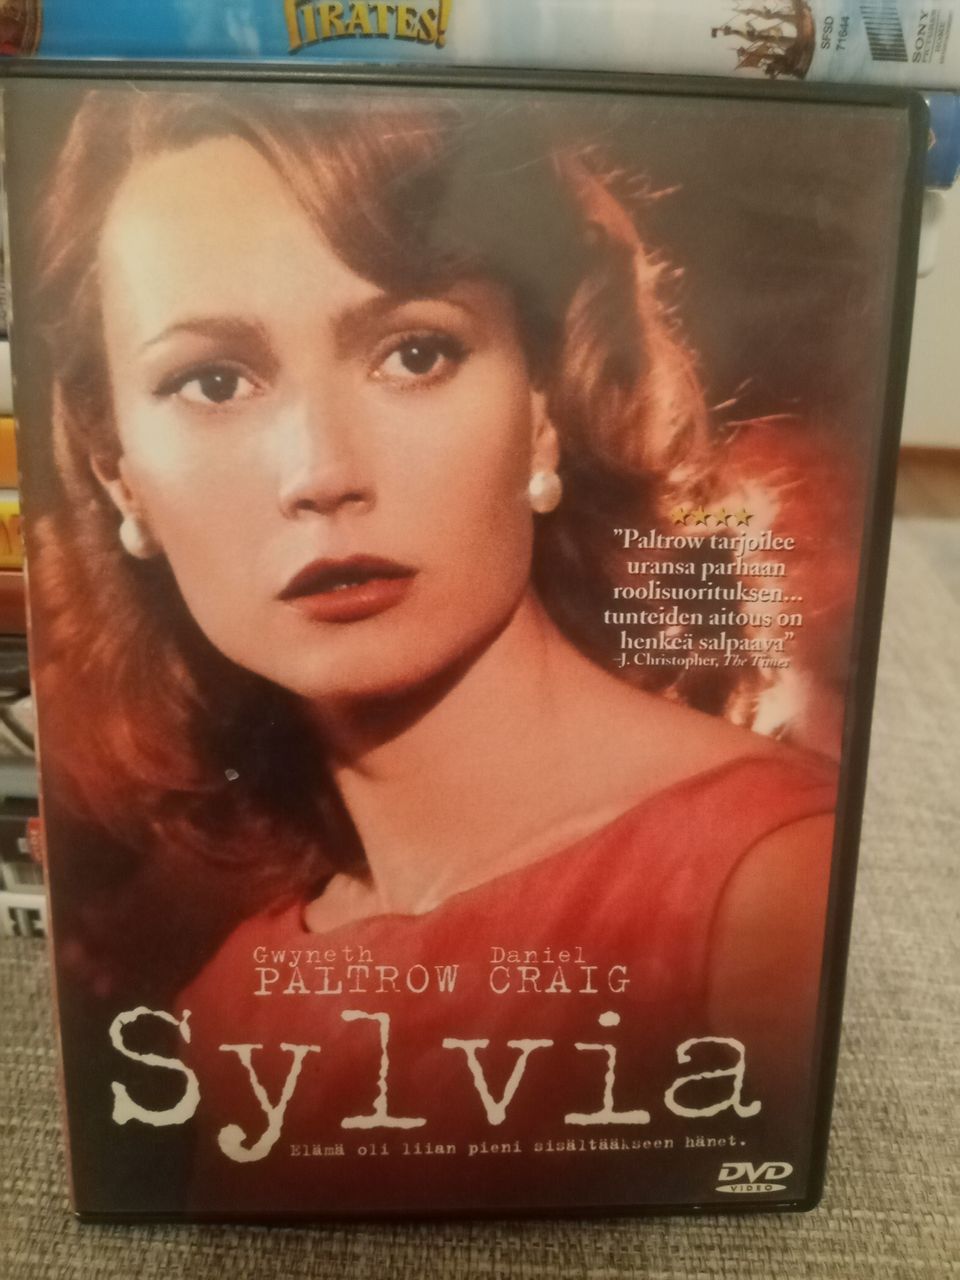 Sylvian dvd